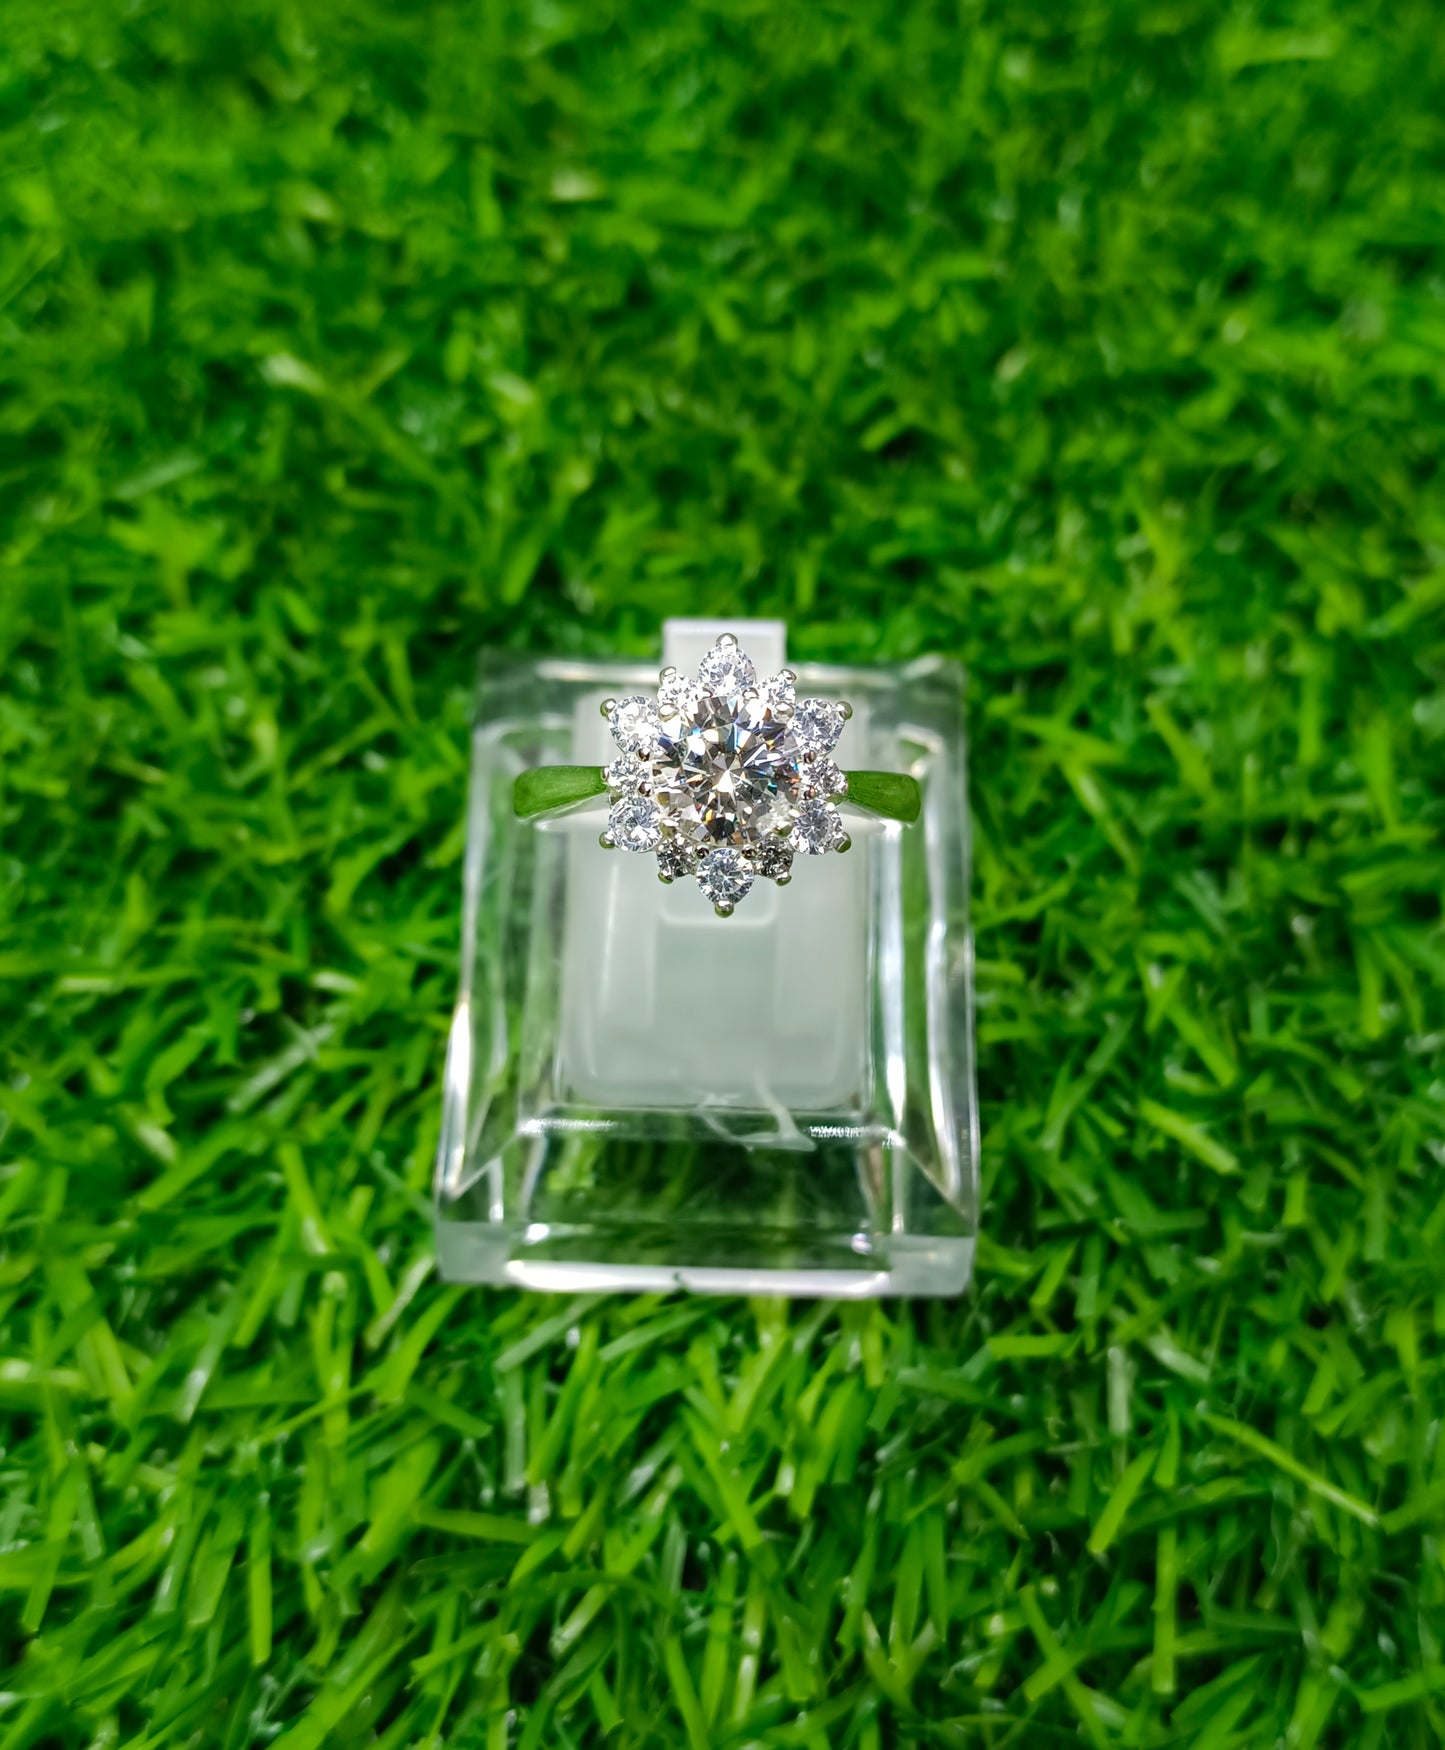 White Moissanite diamond ring for ladies